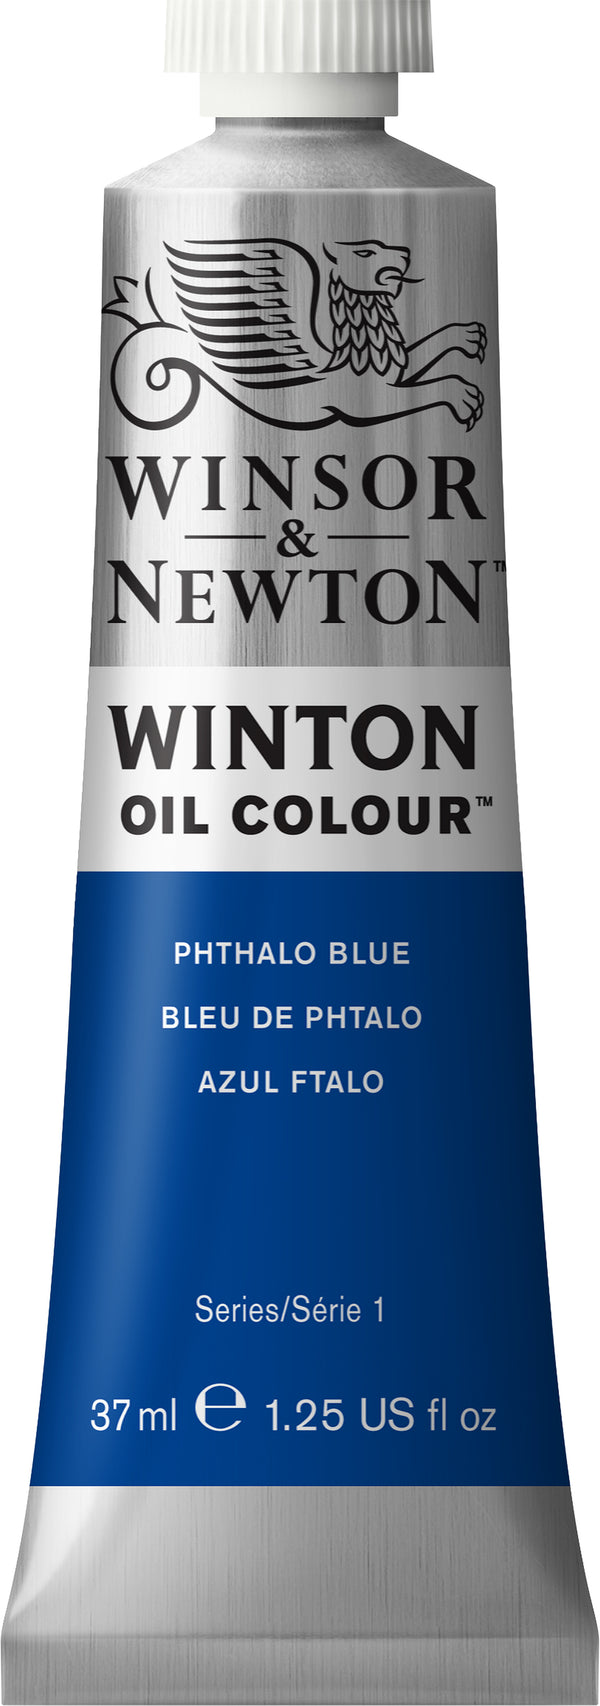 Winsor & Newton Winton Oil Colour 37ml - Phthalo Blue